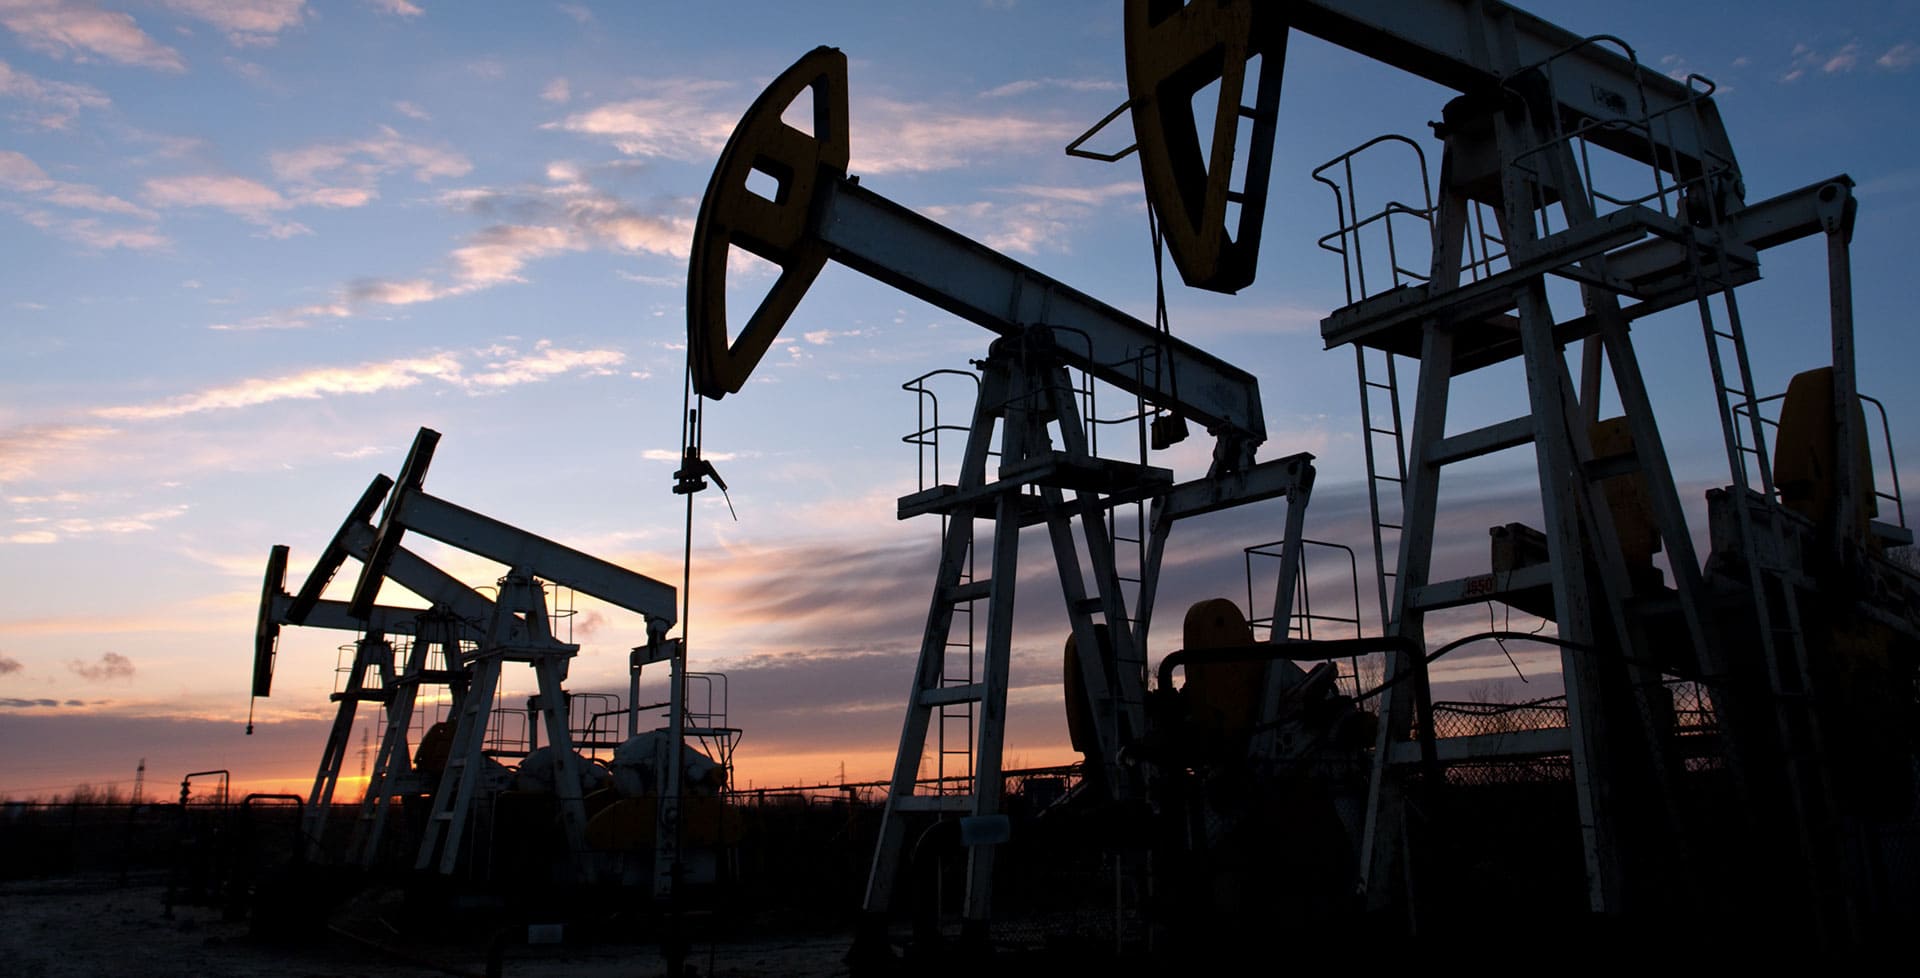 Oil pump silhouettes at dusk